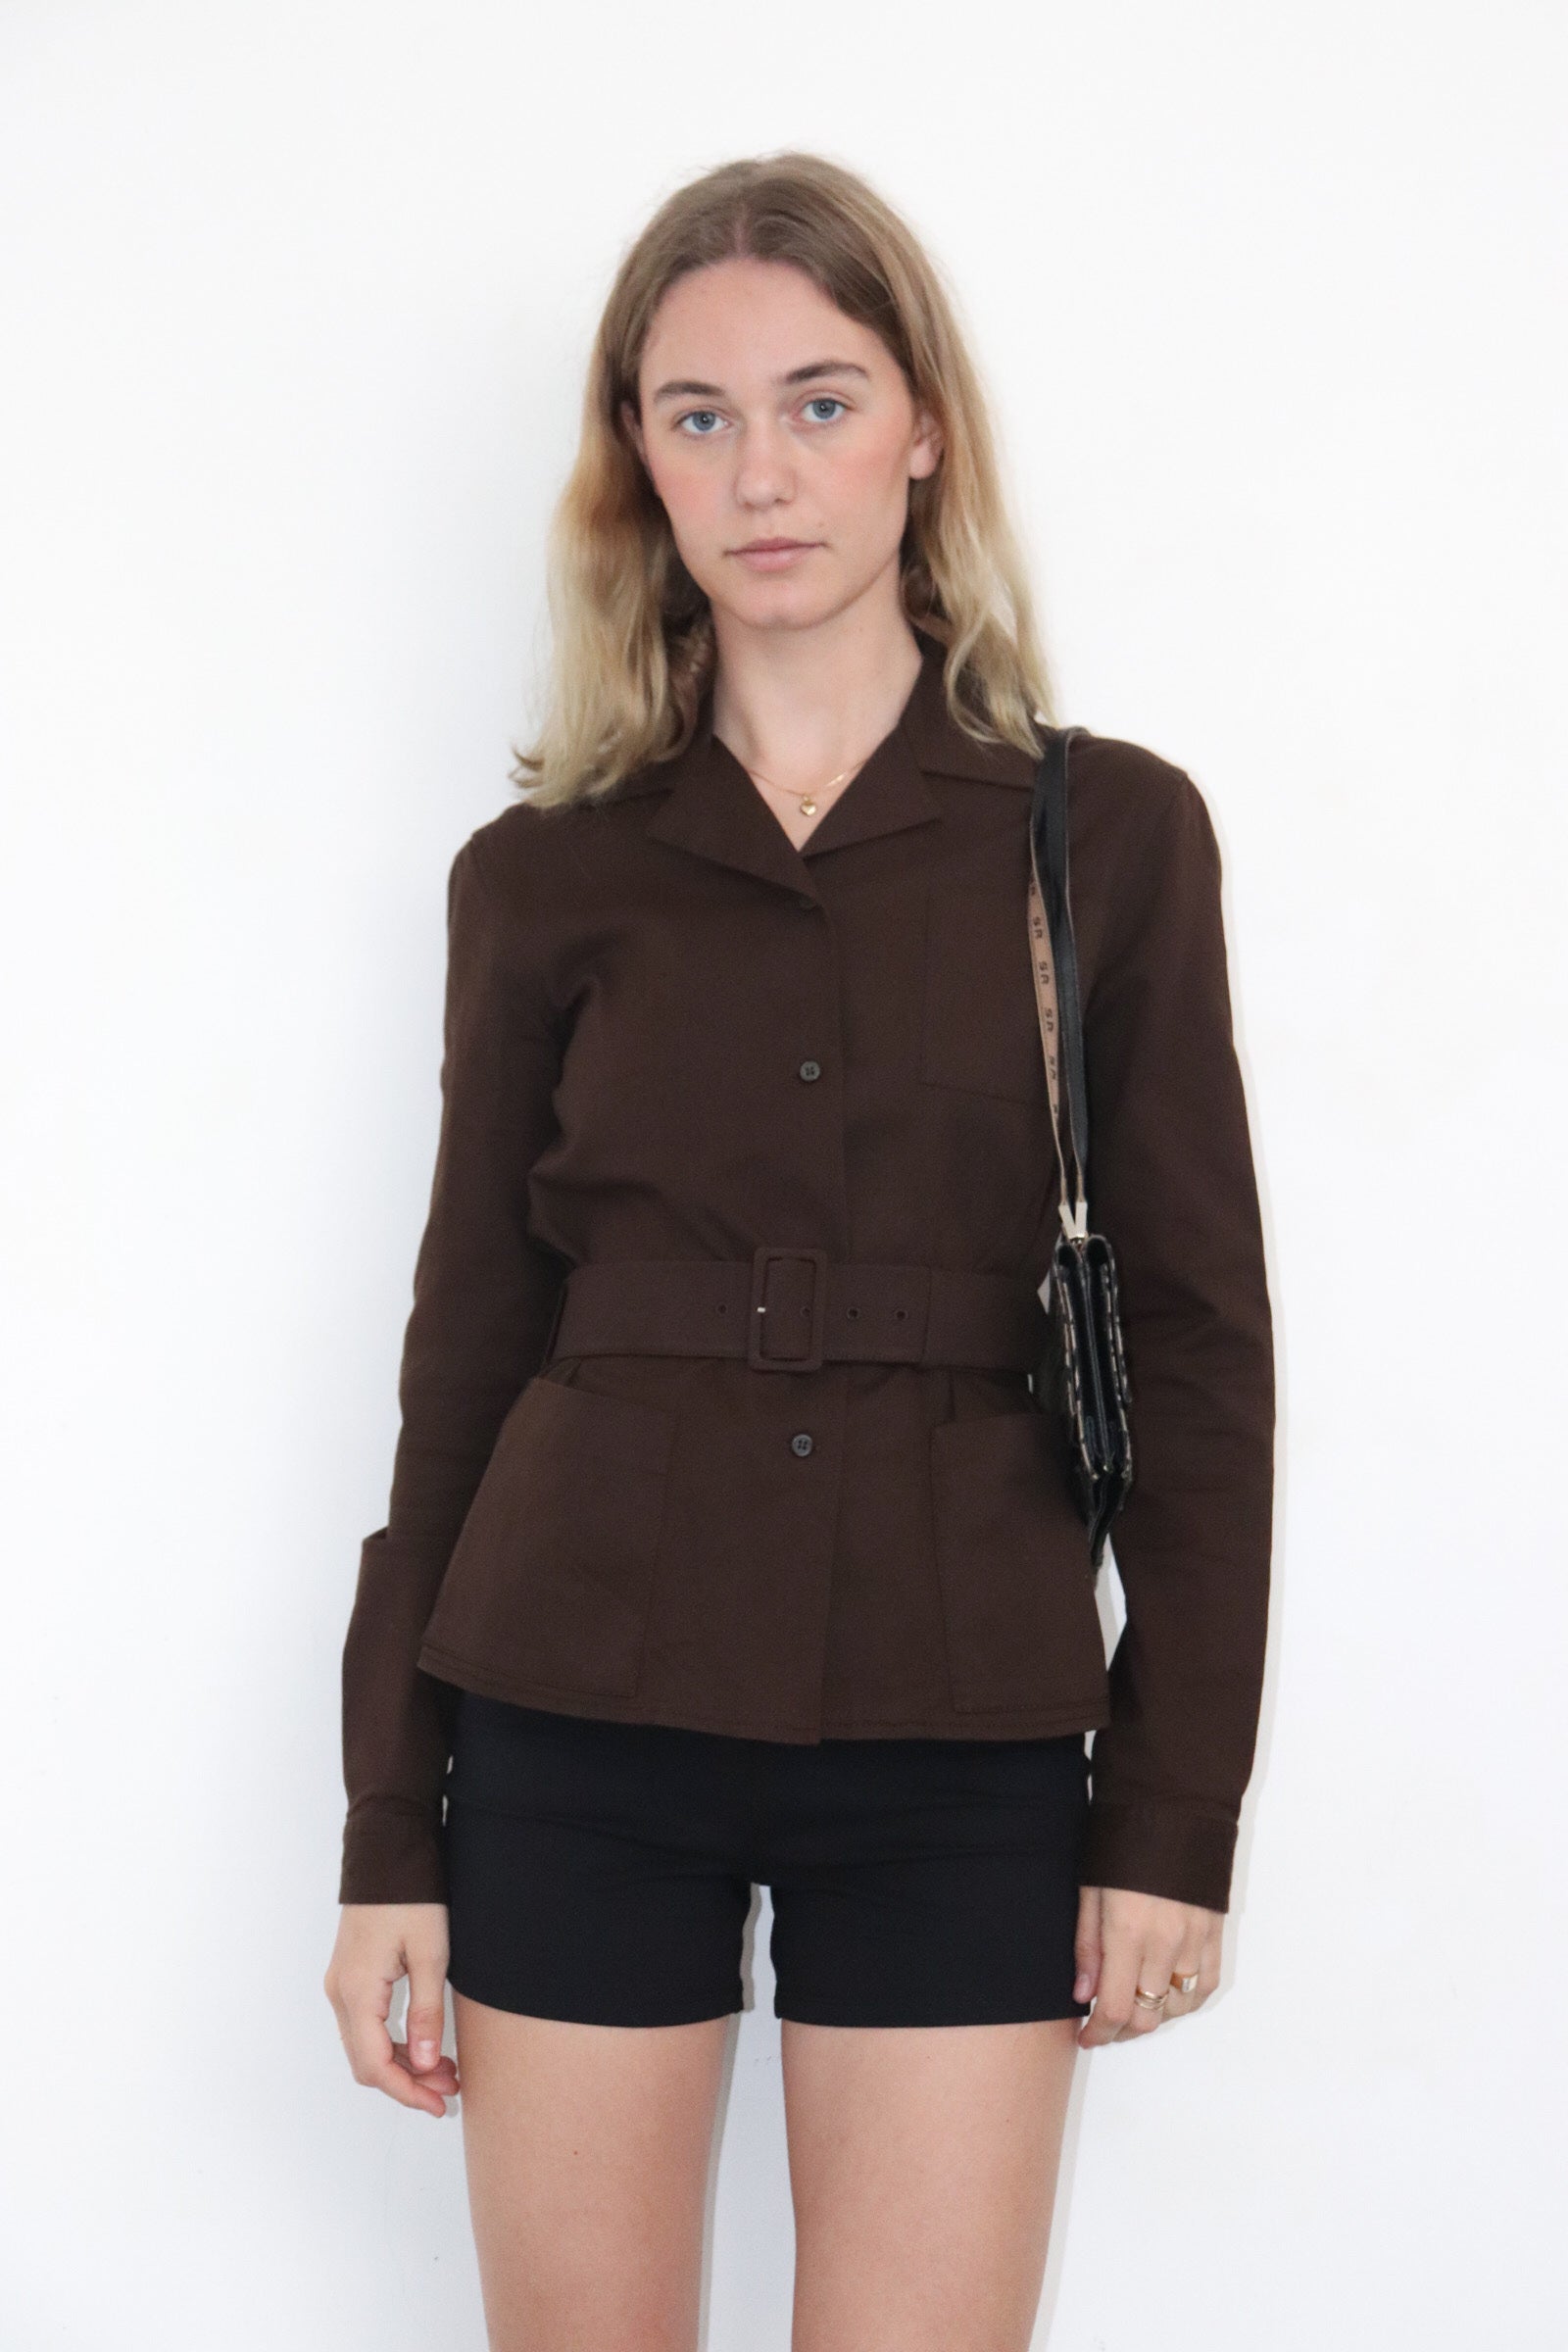 Brown safari style jacket